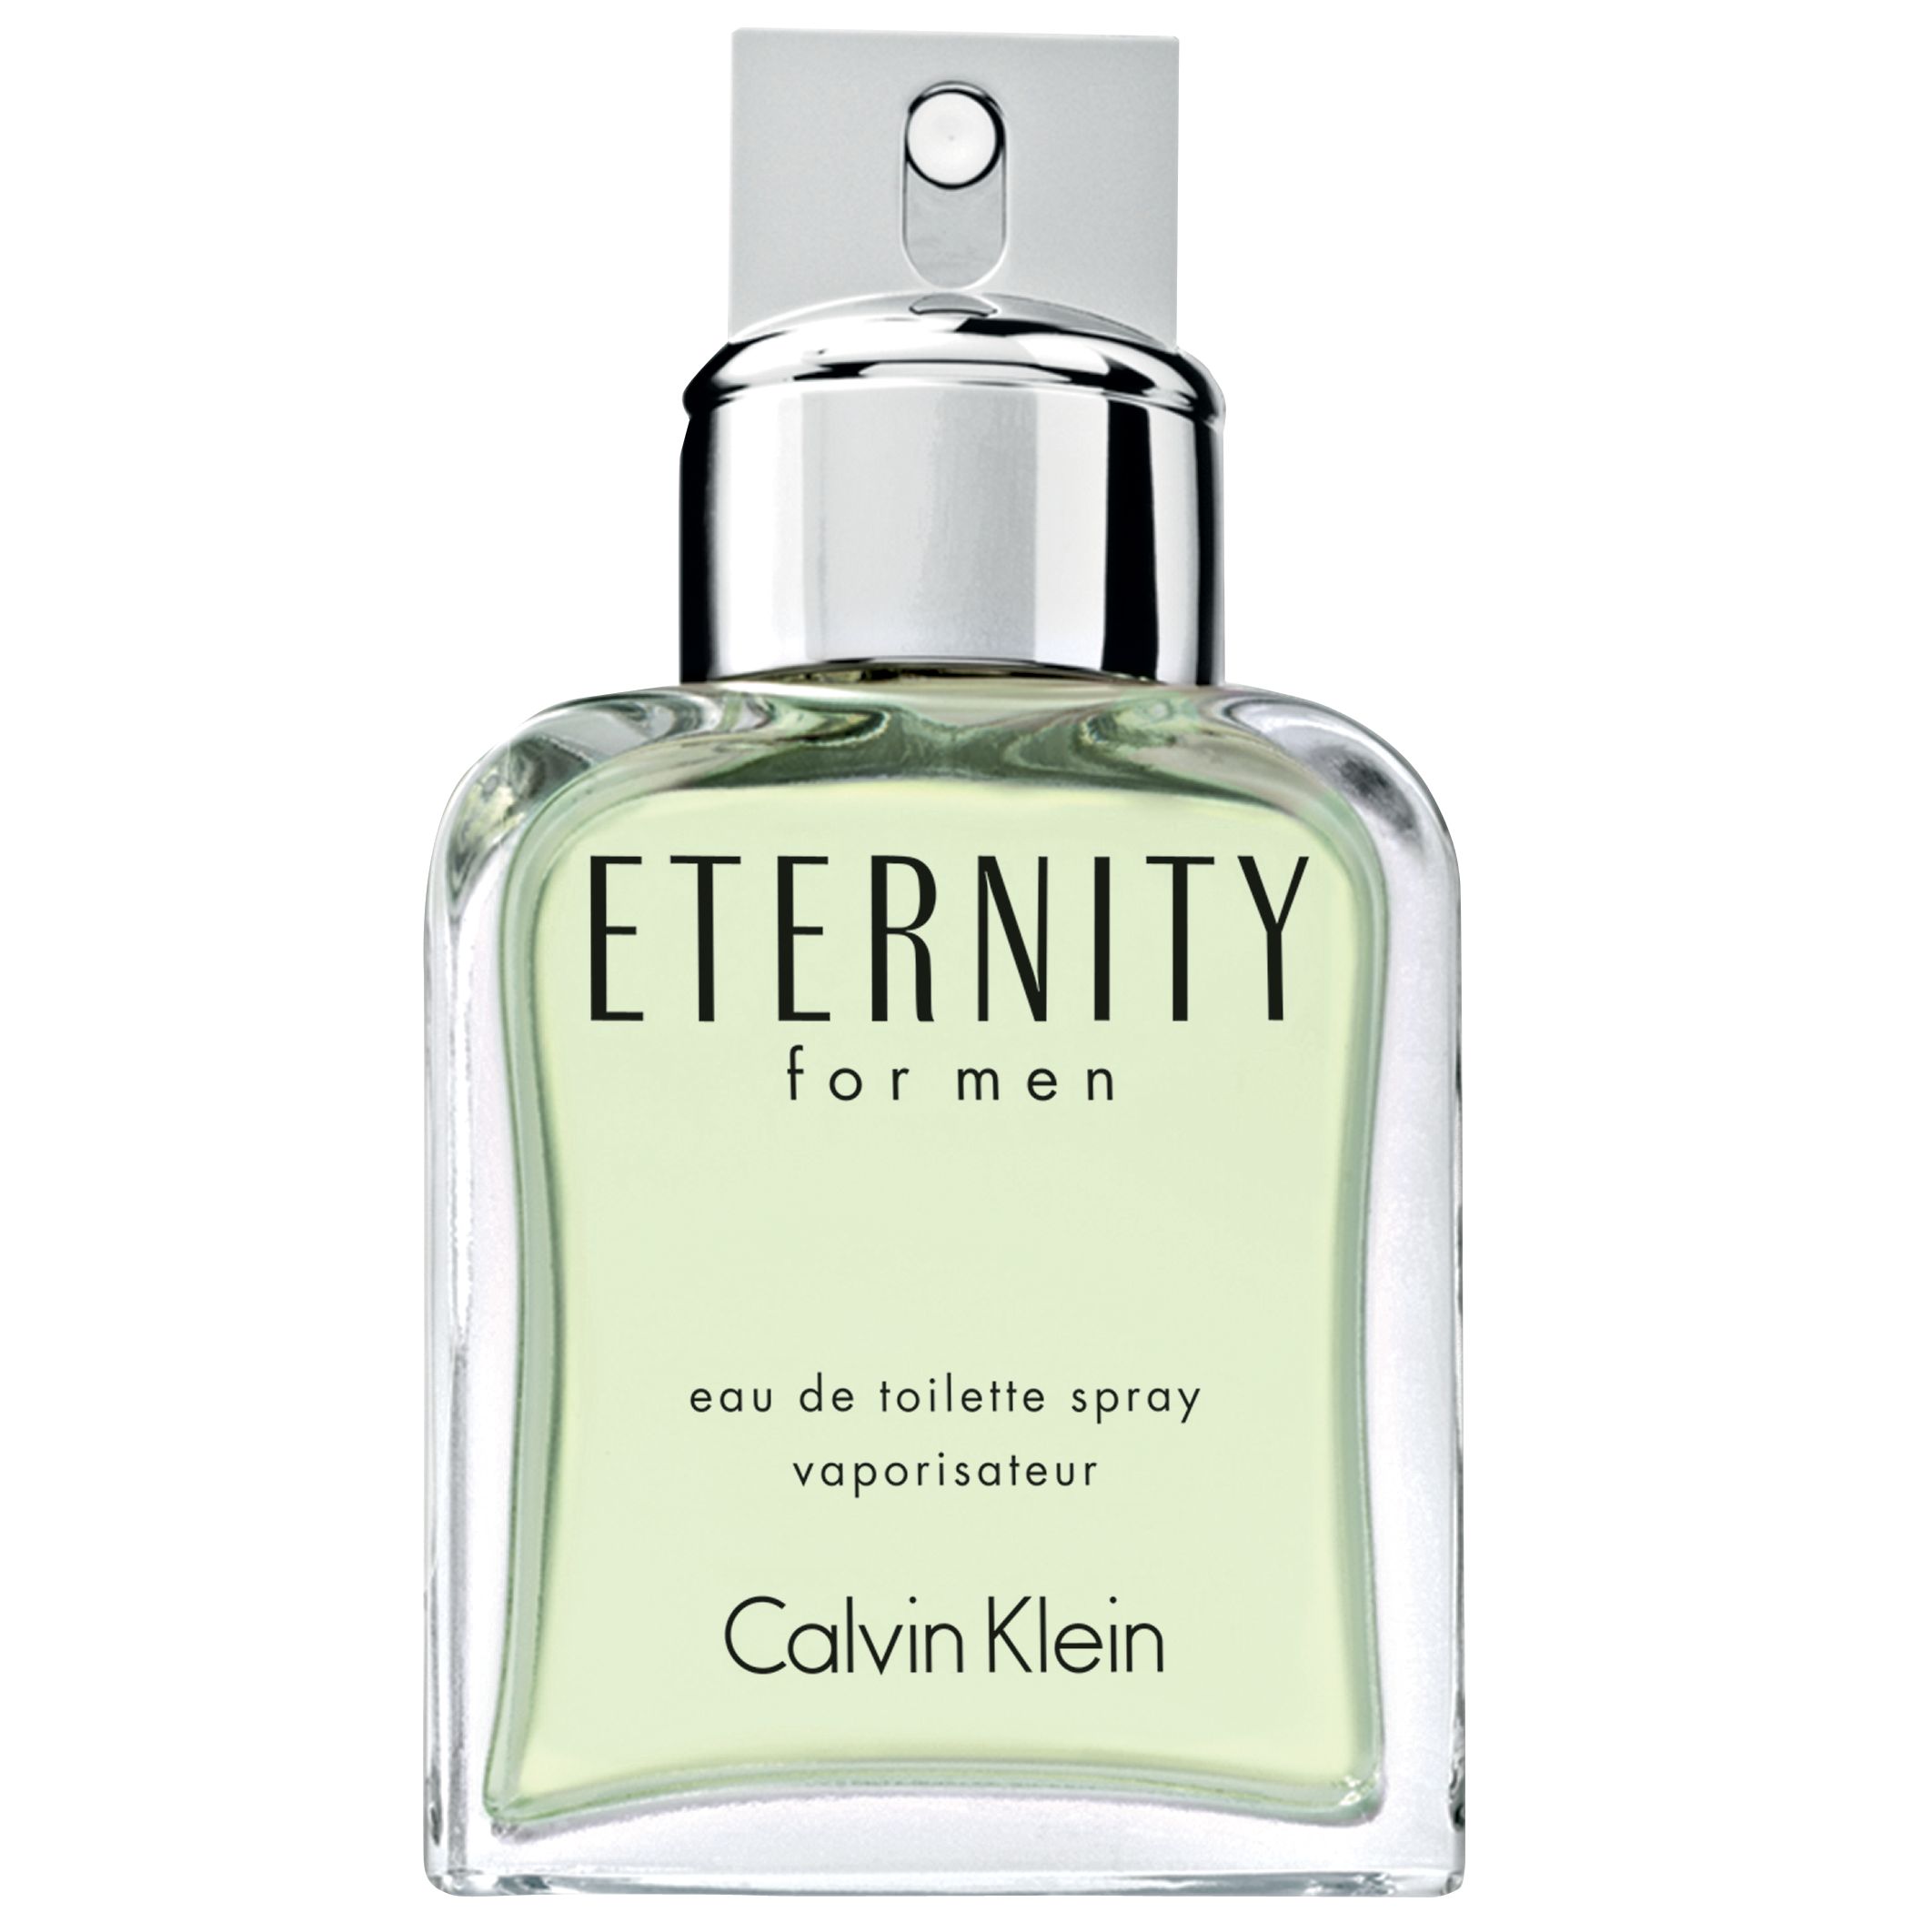 calvin klein Eternity for Men, Eau de Toilette Spray, 50ml